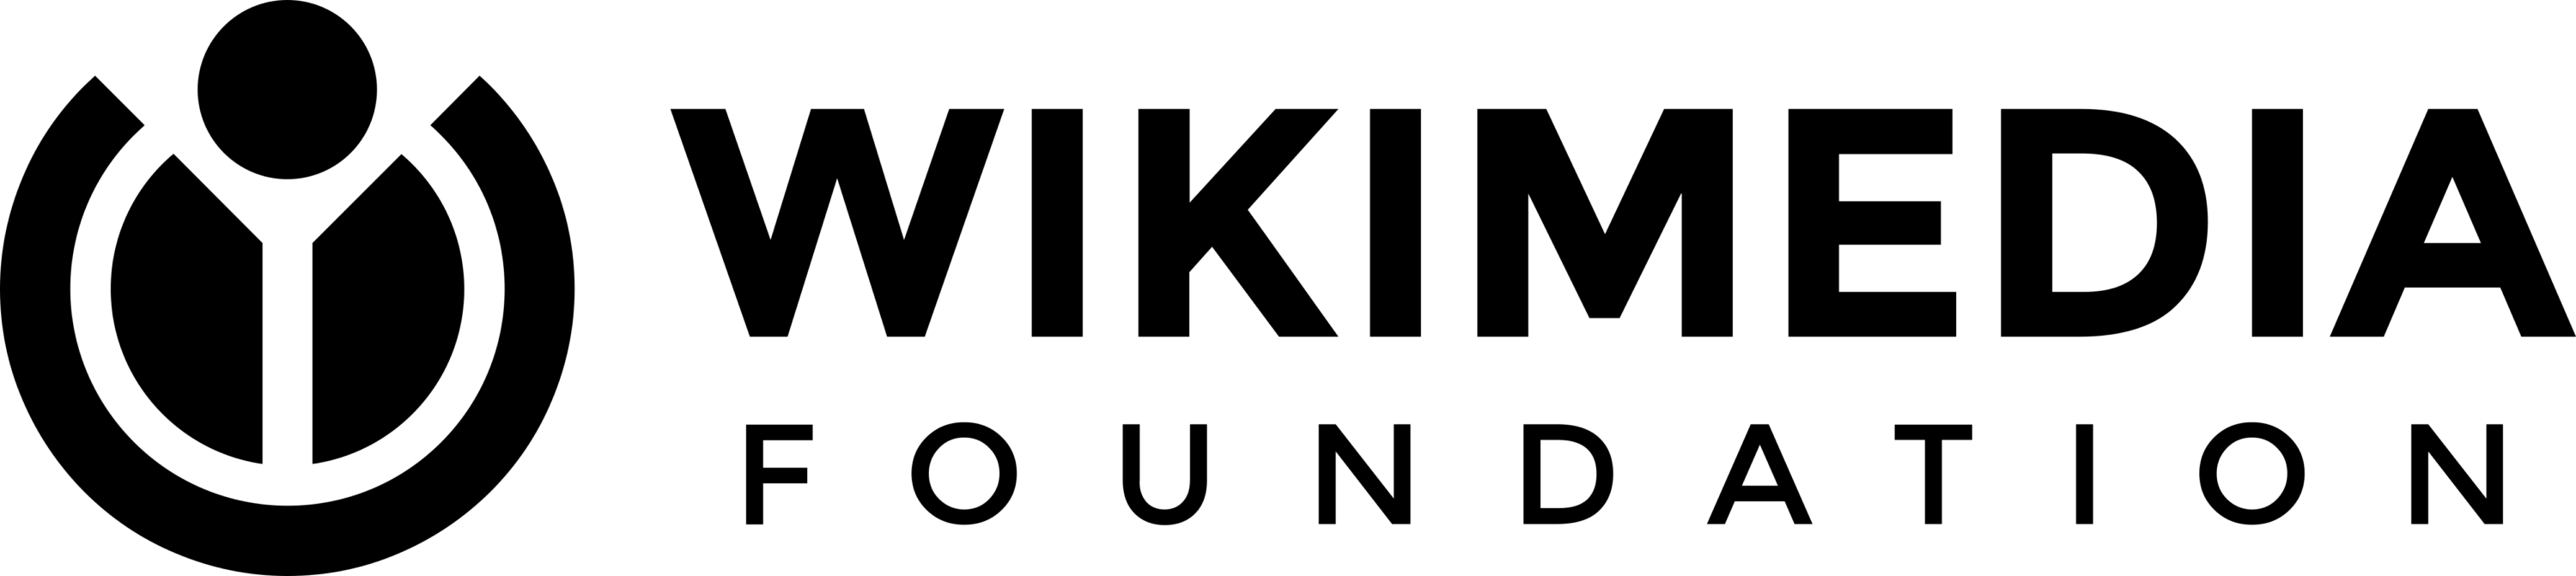 Wikimedia Foundation Logo alternative version